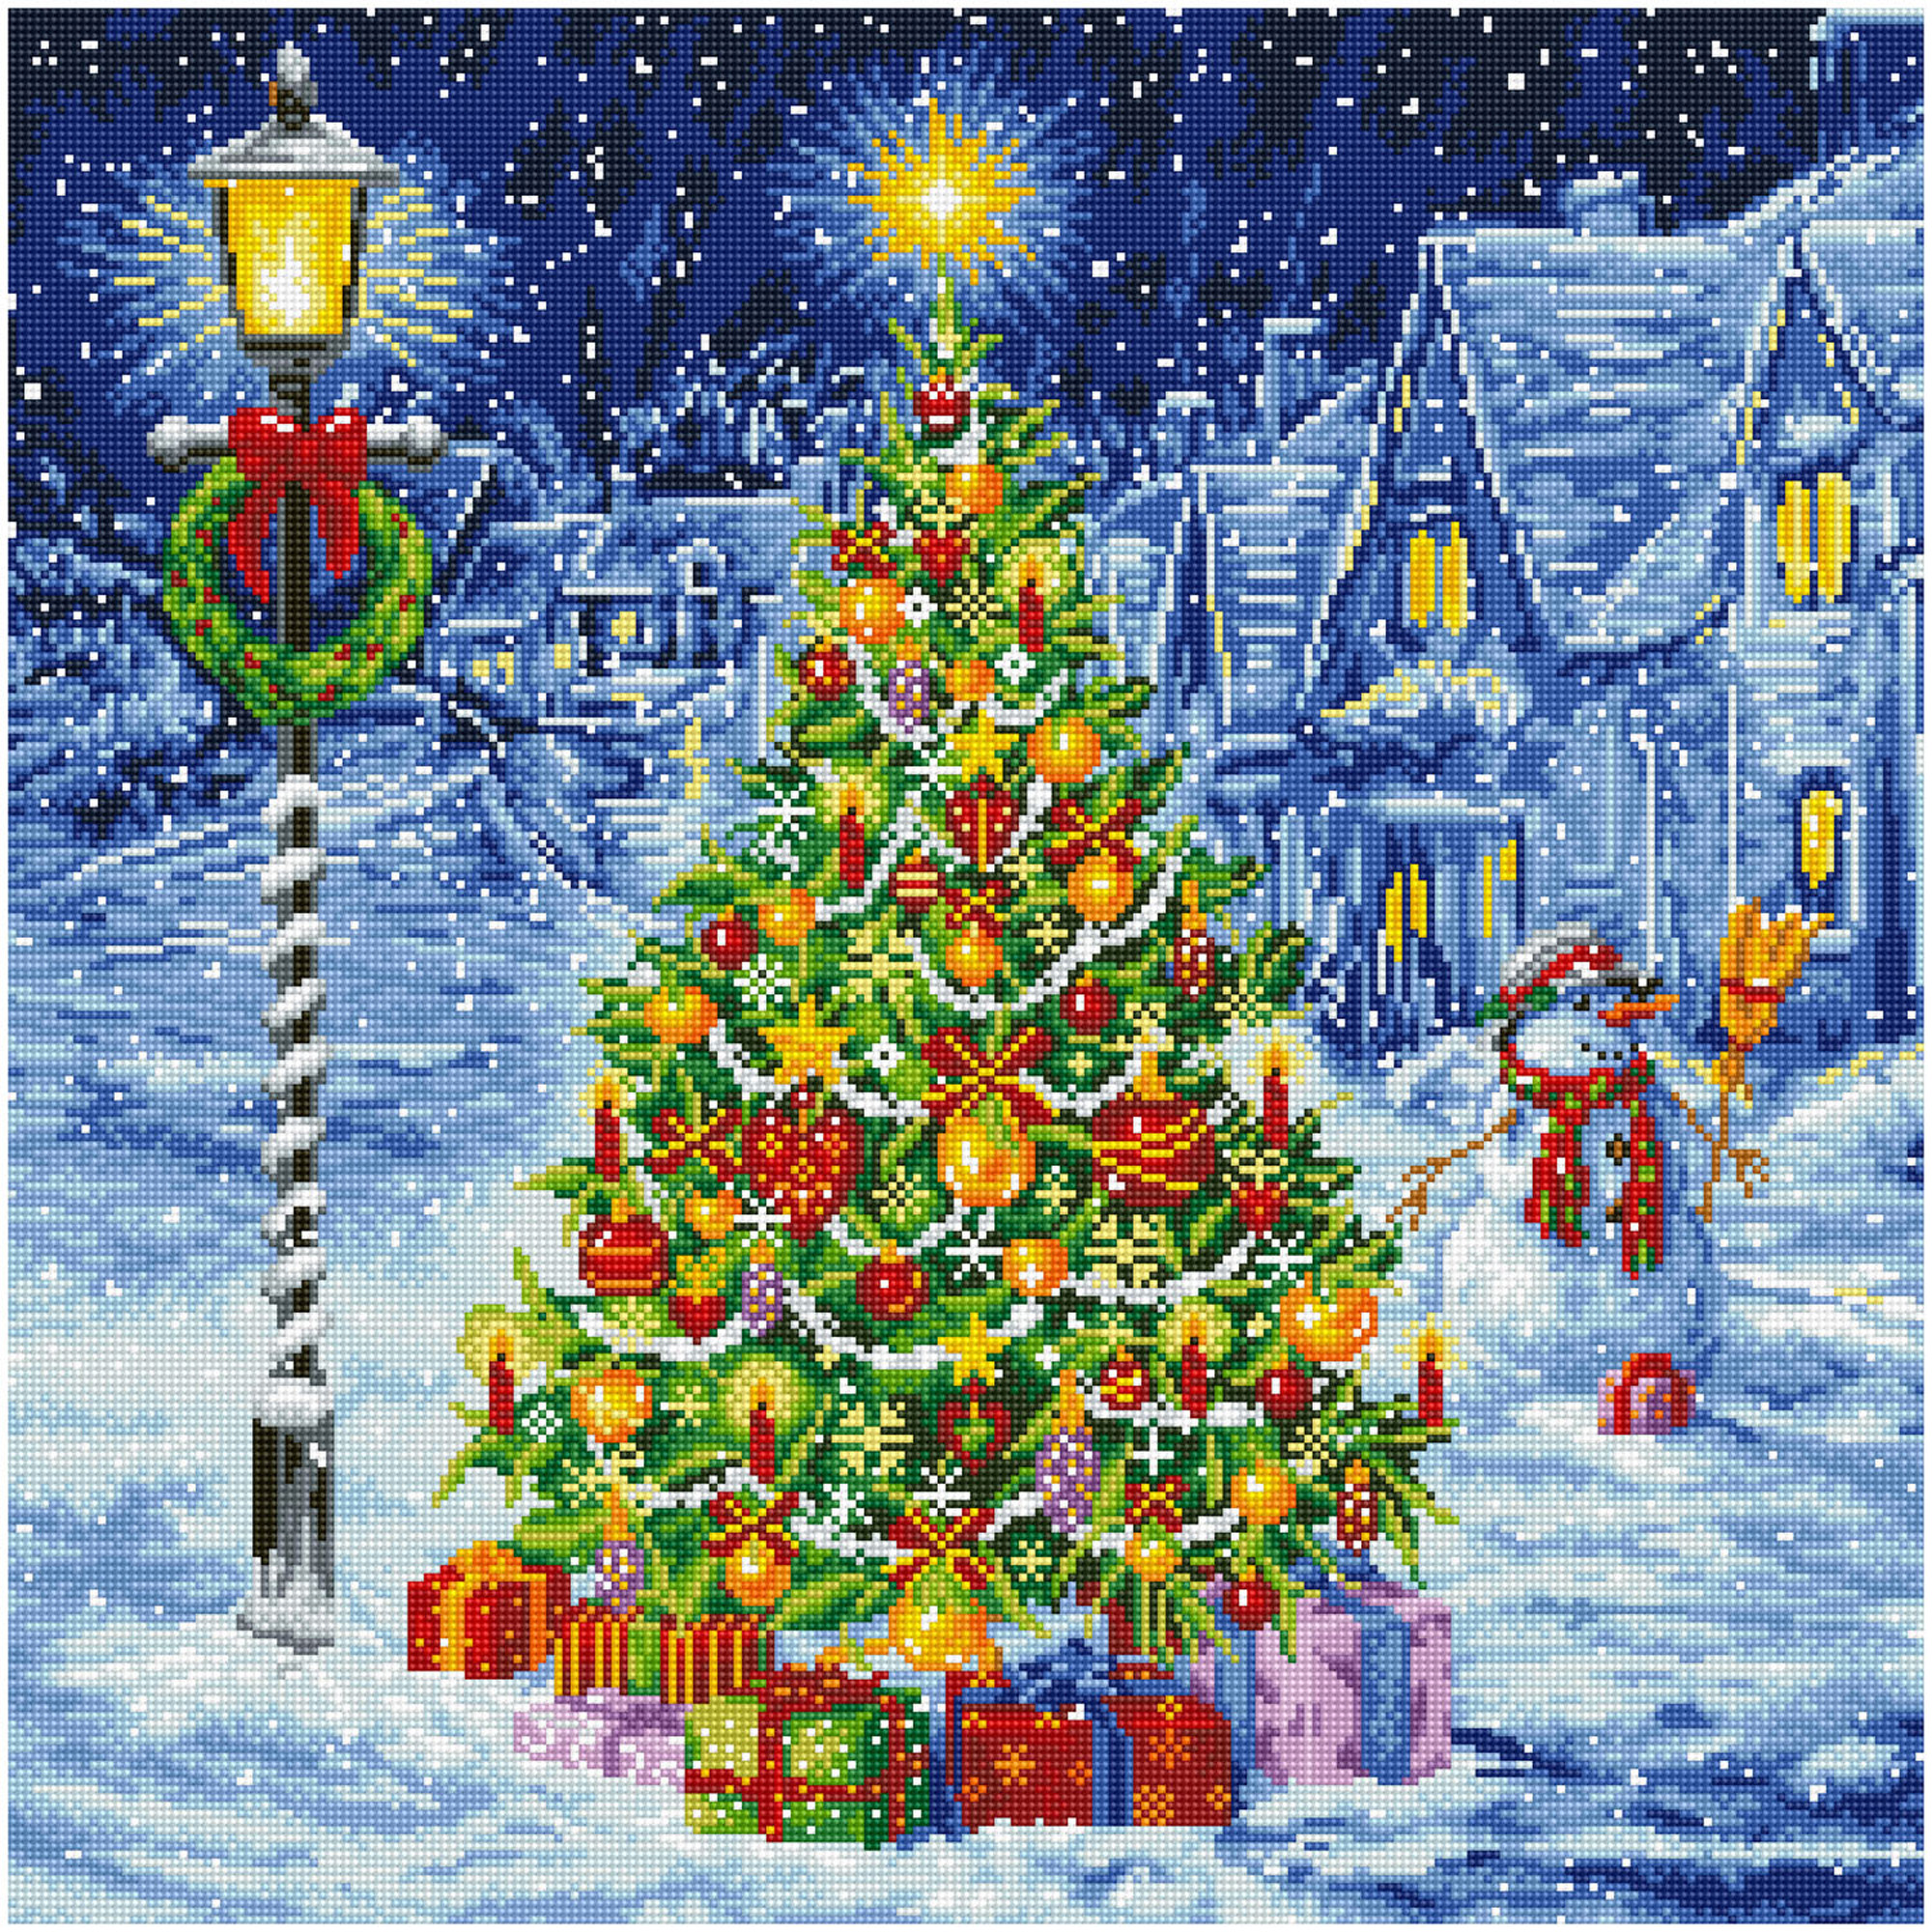 10Pcs/Set DIY Diamond Painting Christmas Tree Pendant Decor Gift TM KuierShop